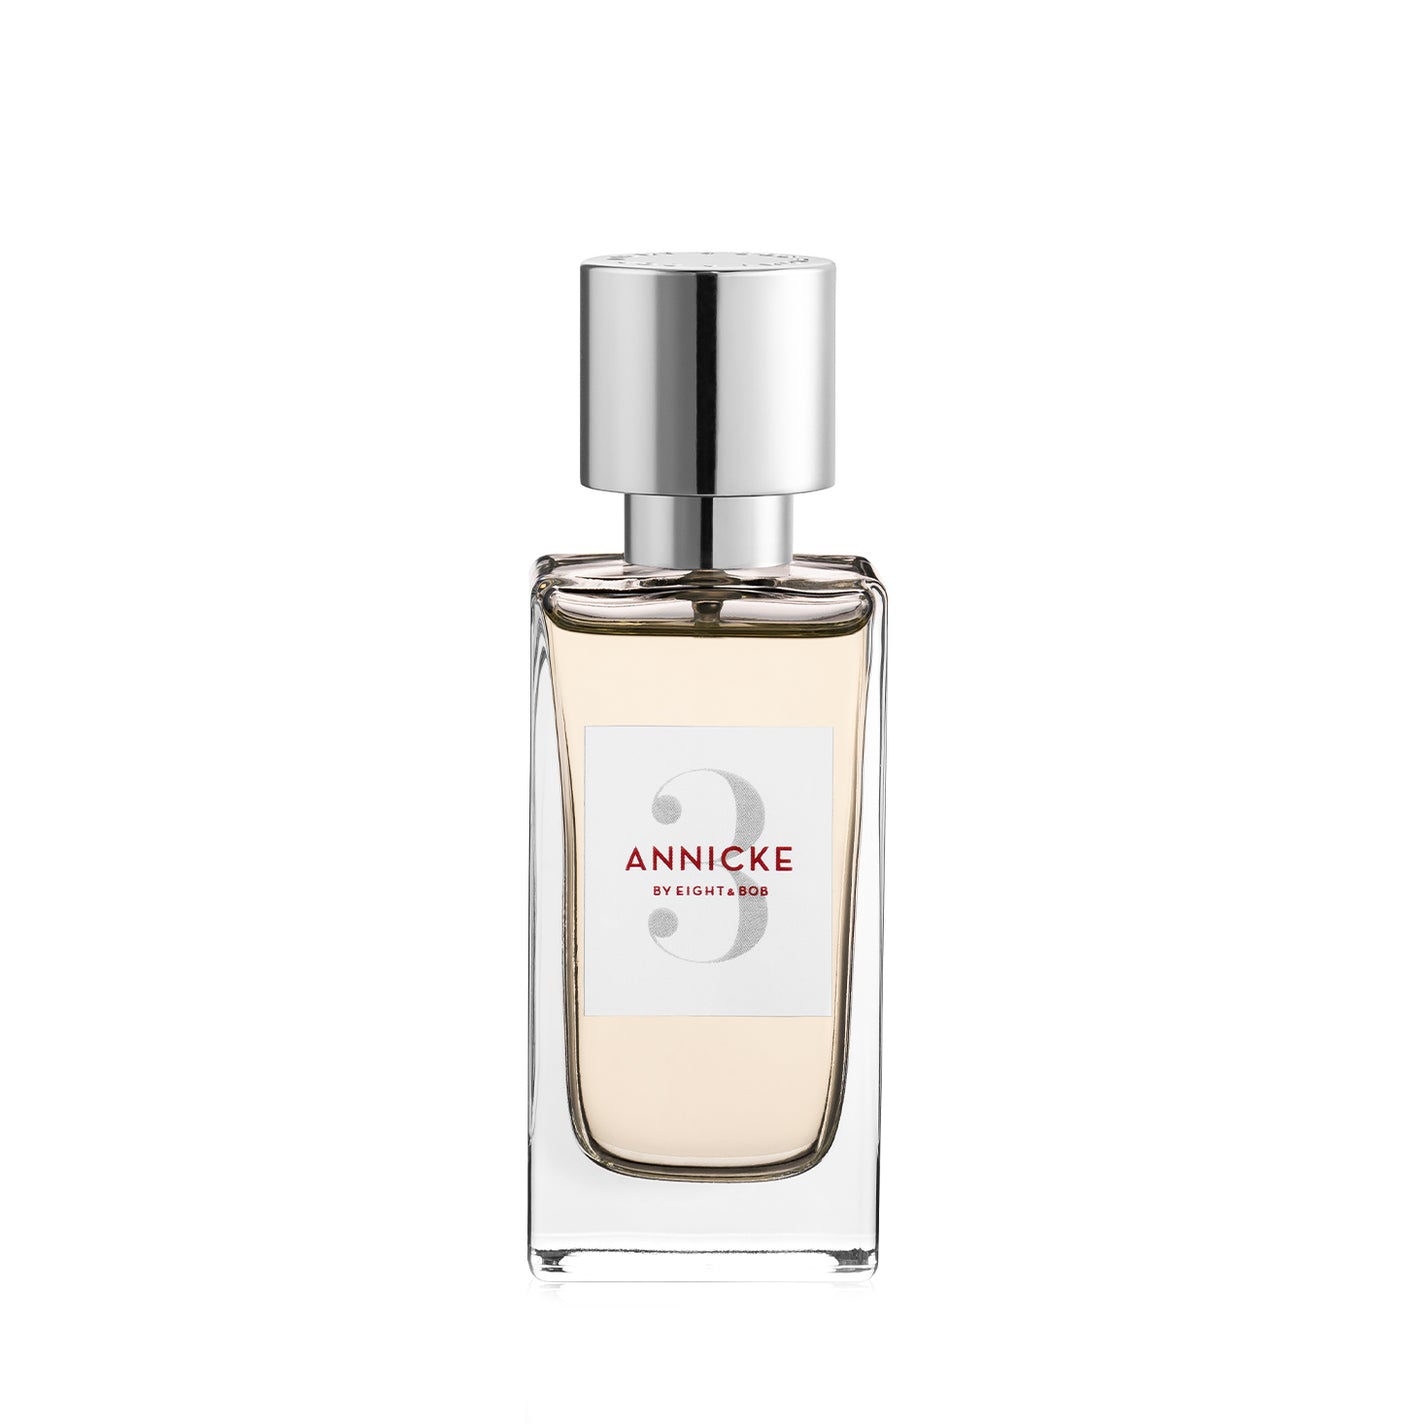 Eight & Bob Annicke #3 Eau de Parfum - 30ml